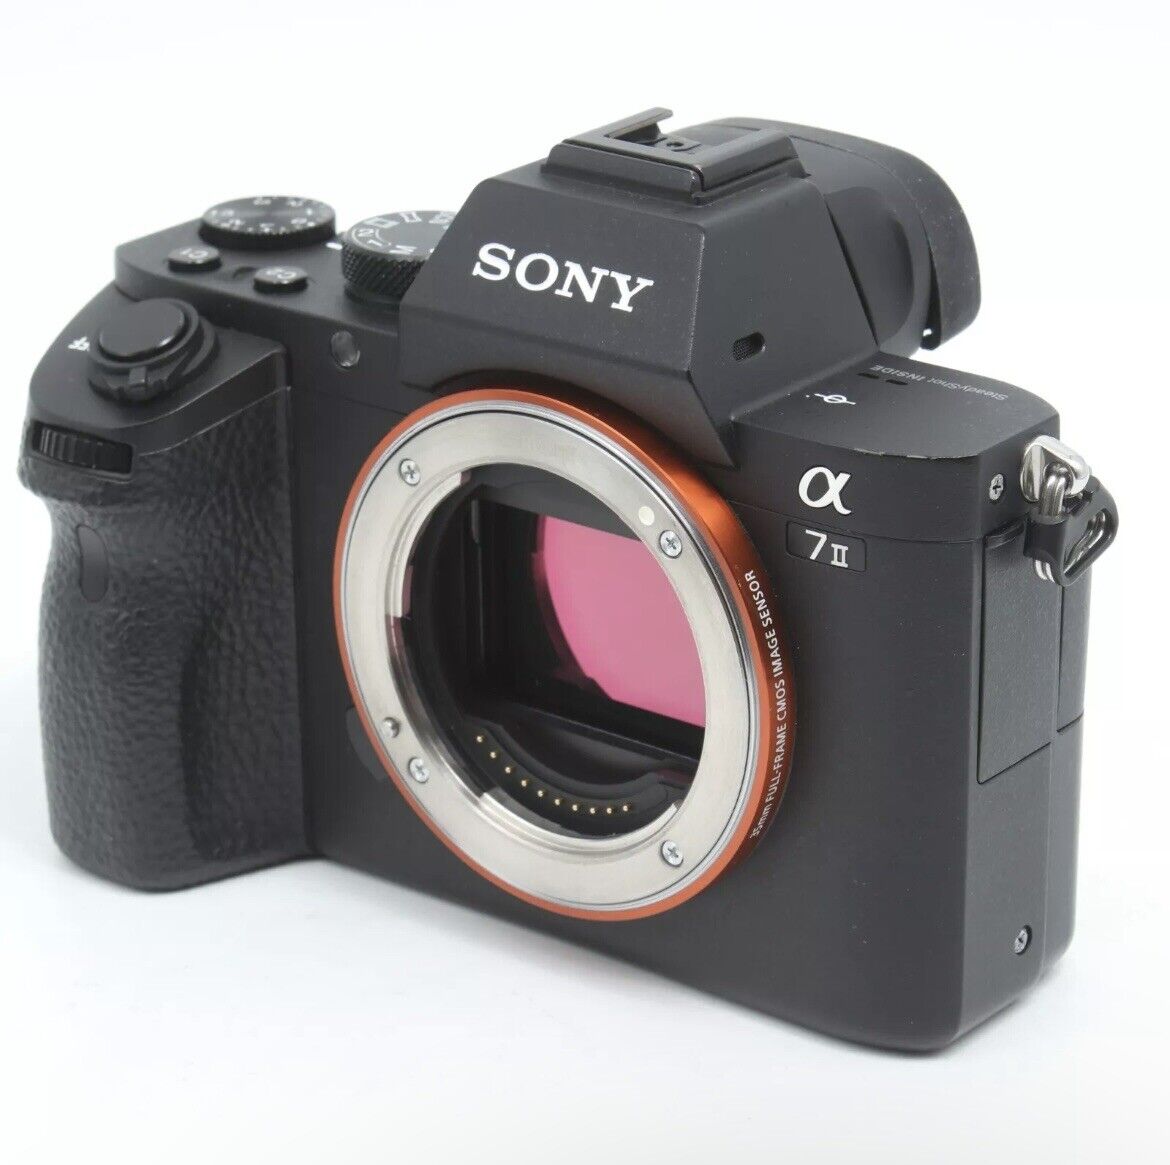 Sony A7 II 24.3 MP Digital Mirrorless Camera Body + 2 Batteries + Charging Dock